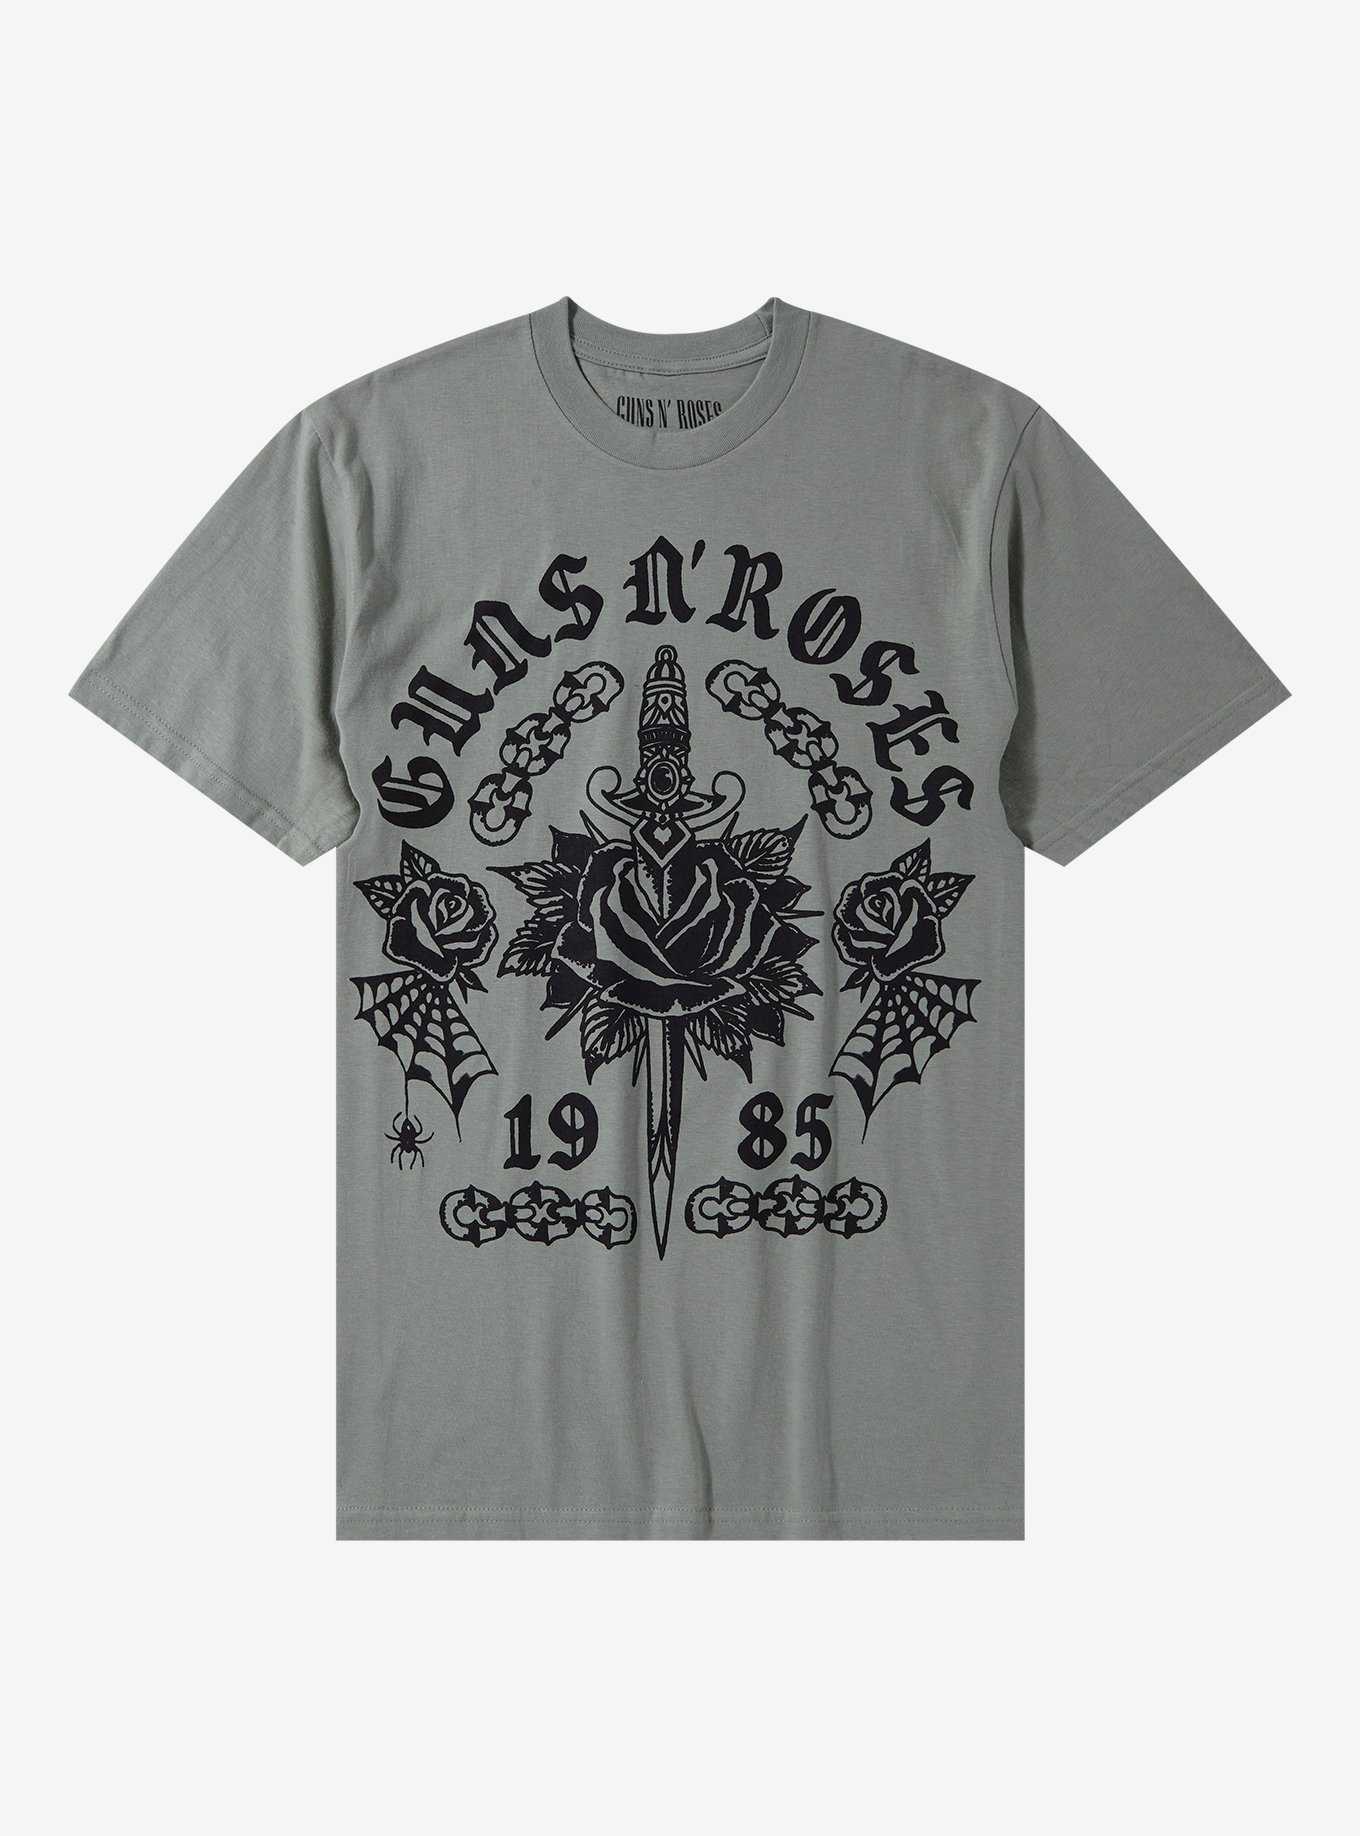 Guns N' Roses Heart Dagger Boyfriend Fit Girls T-Shirt, , hi-res